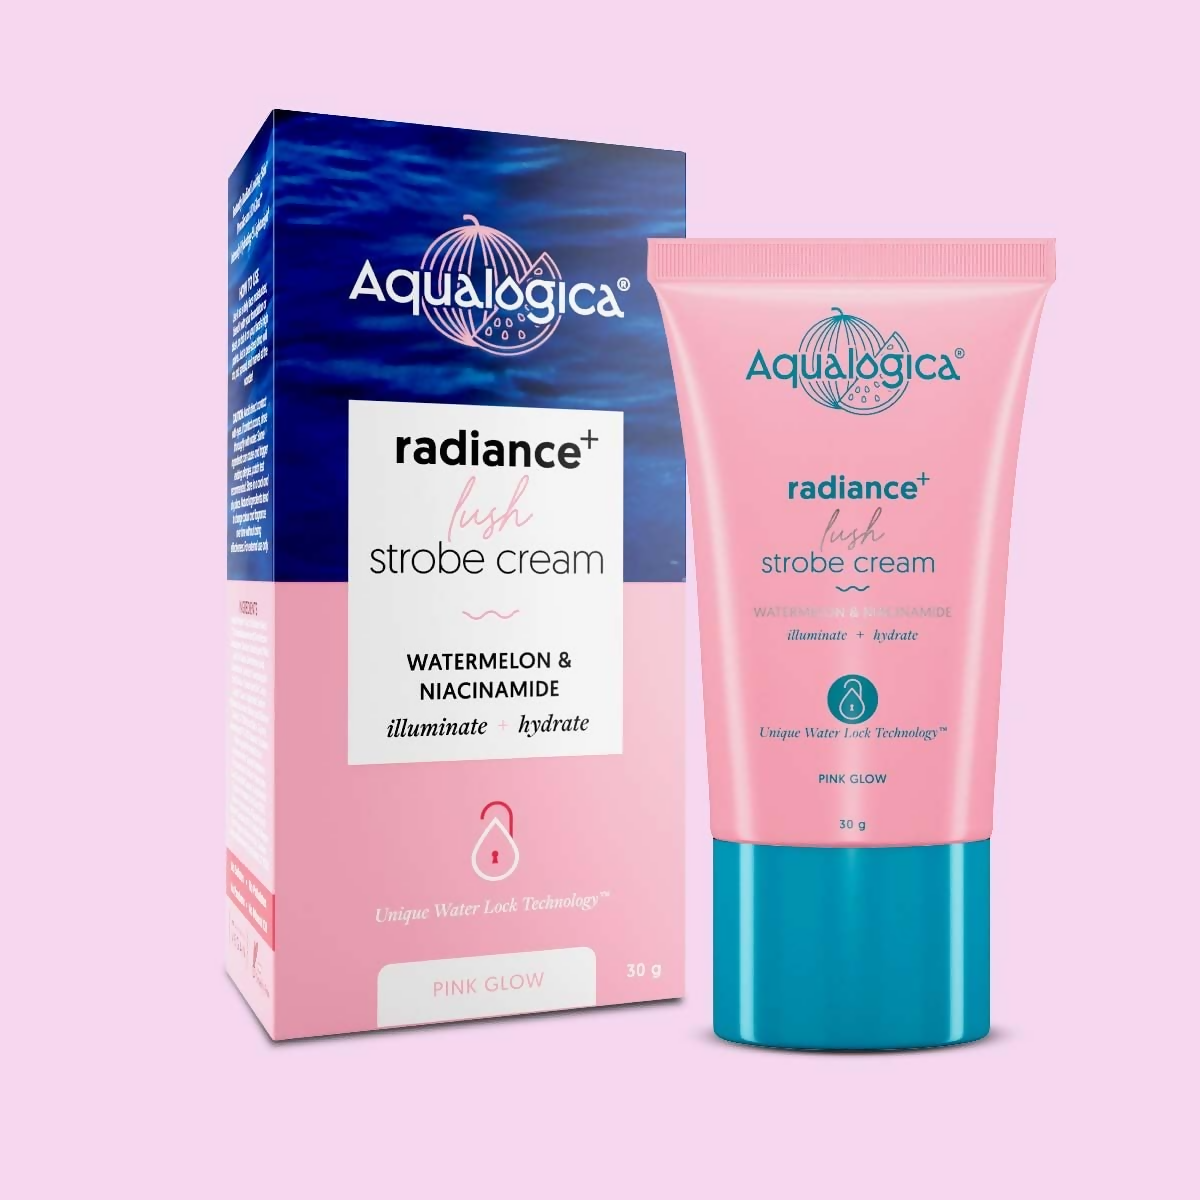 Aqualogica Radiance+ Lush Strobe Cream